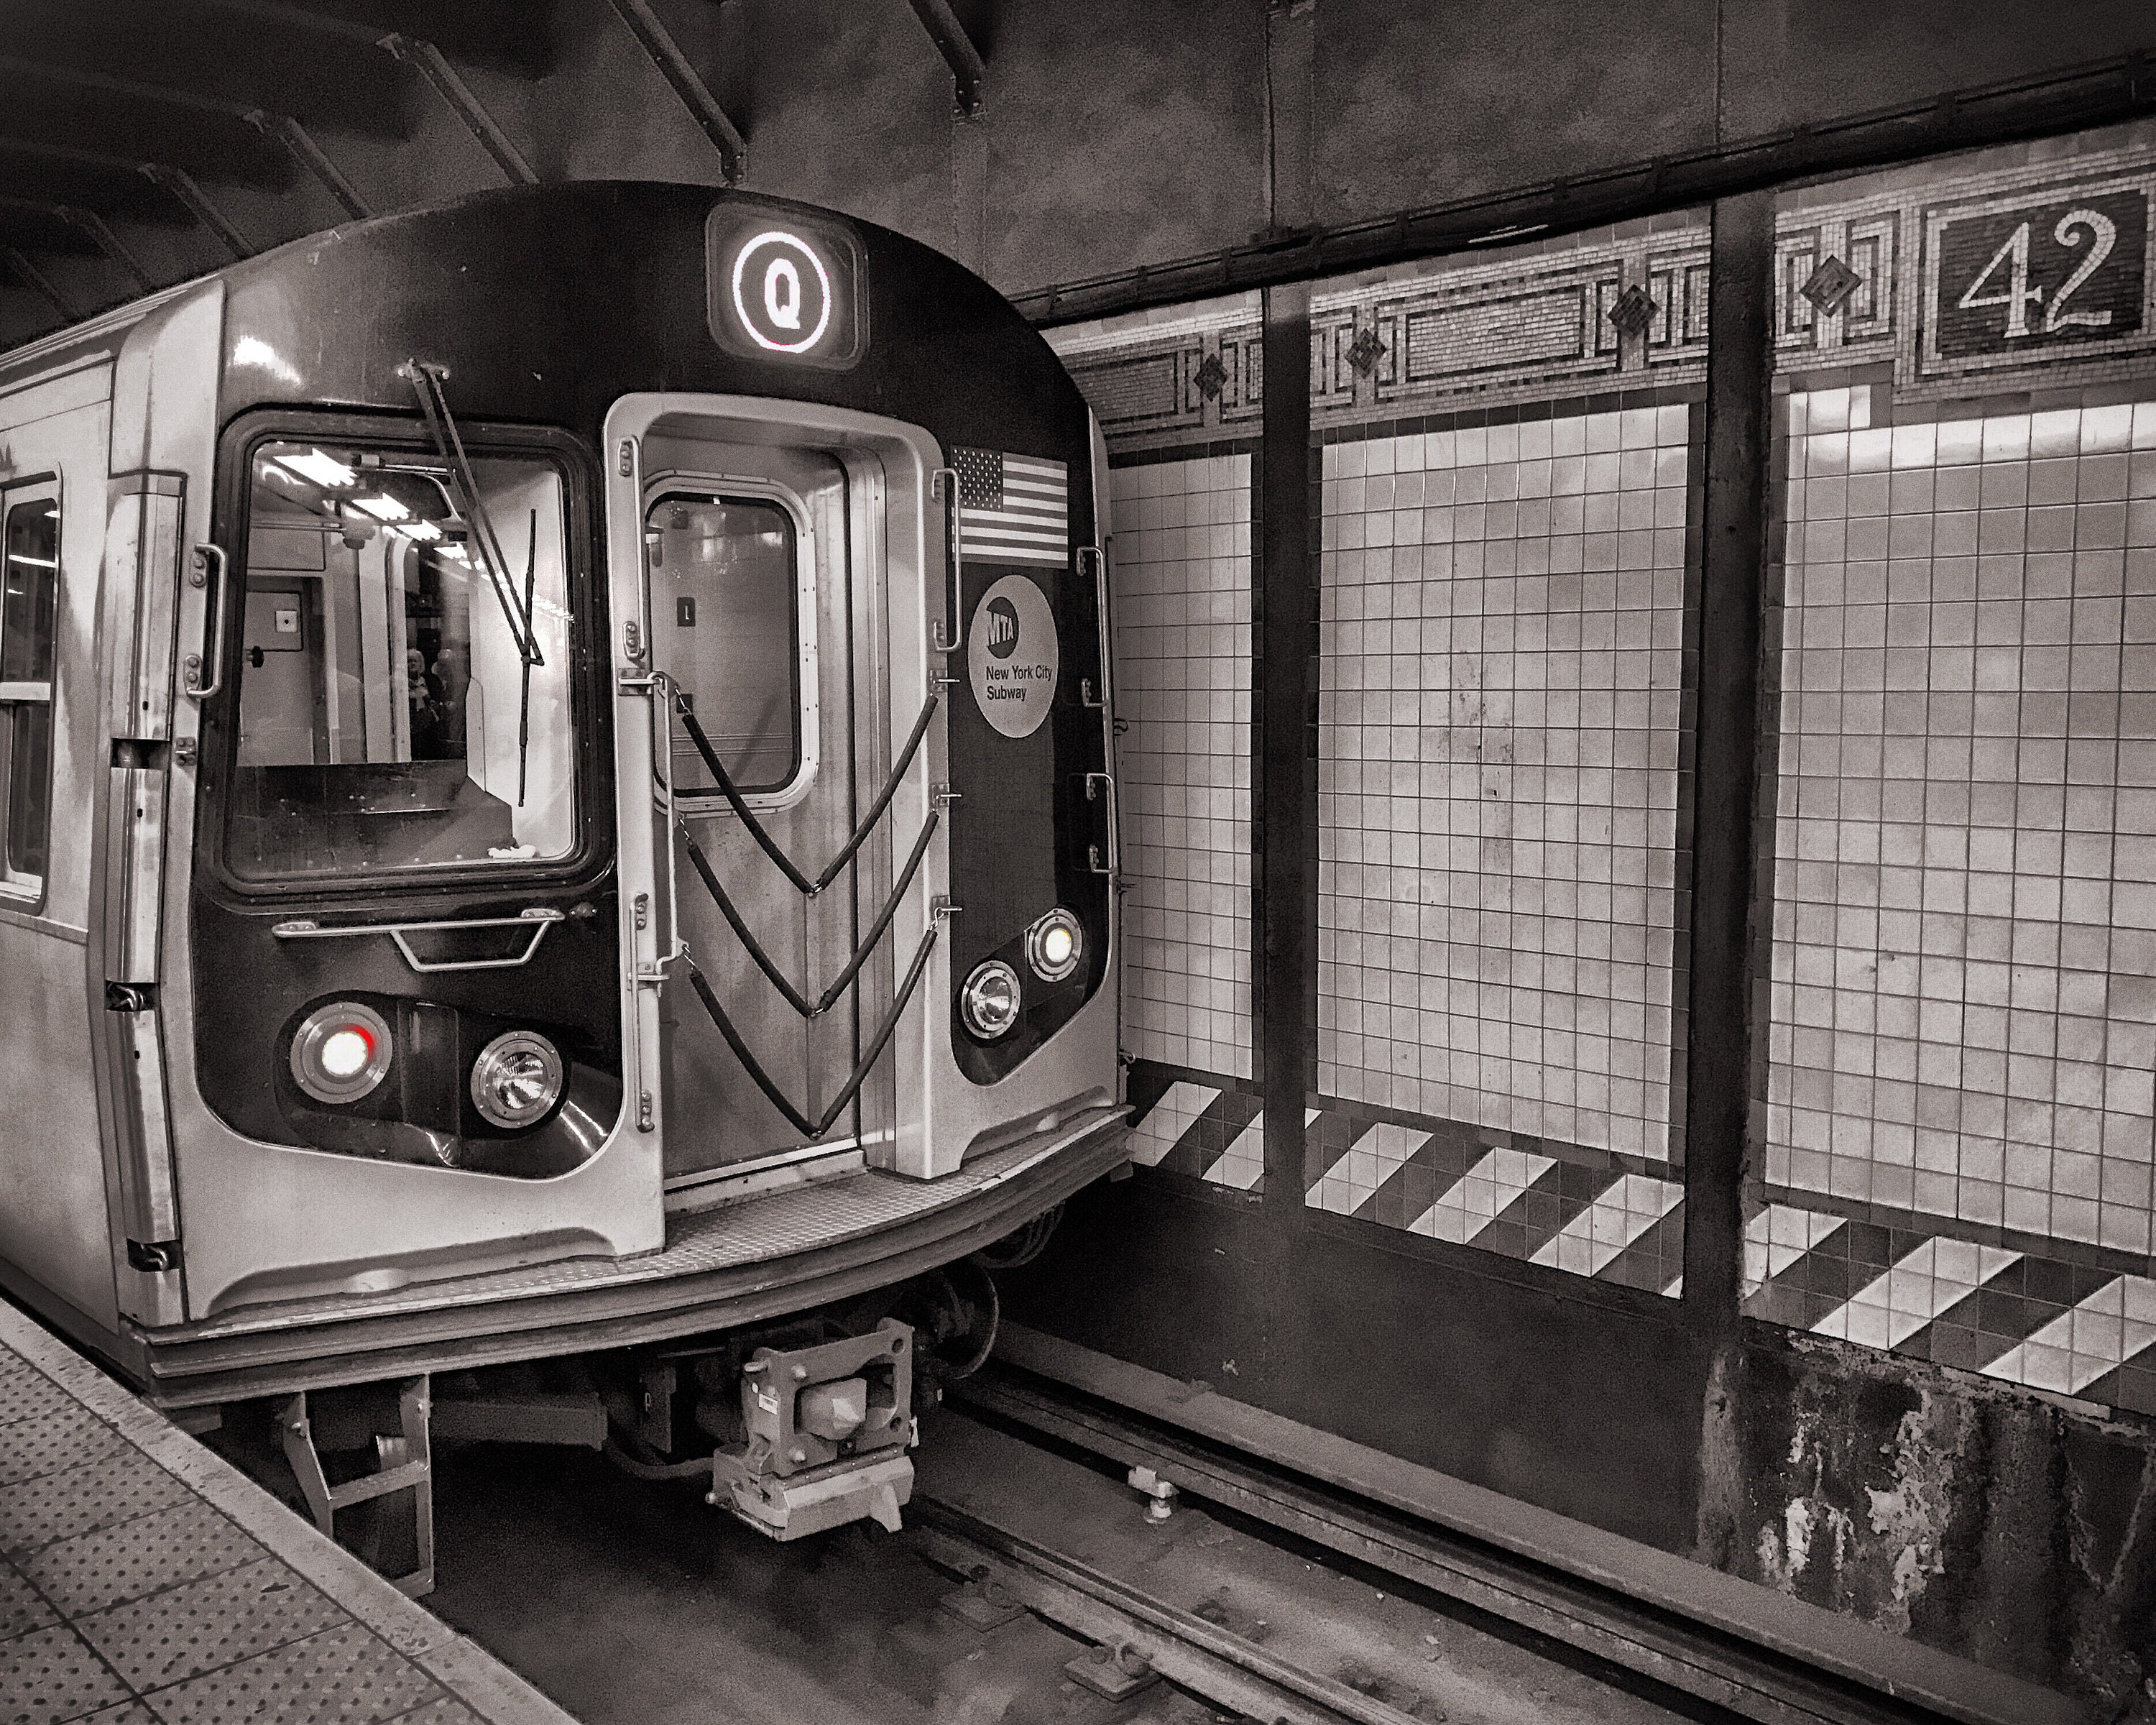 Nyc Subway Q Train 42nd Street Large Wall Art Photography Etsy Uk